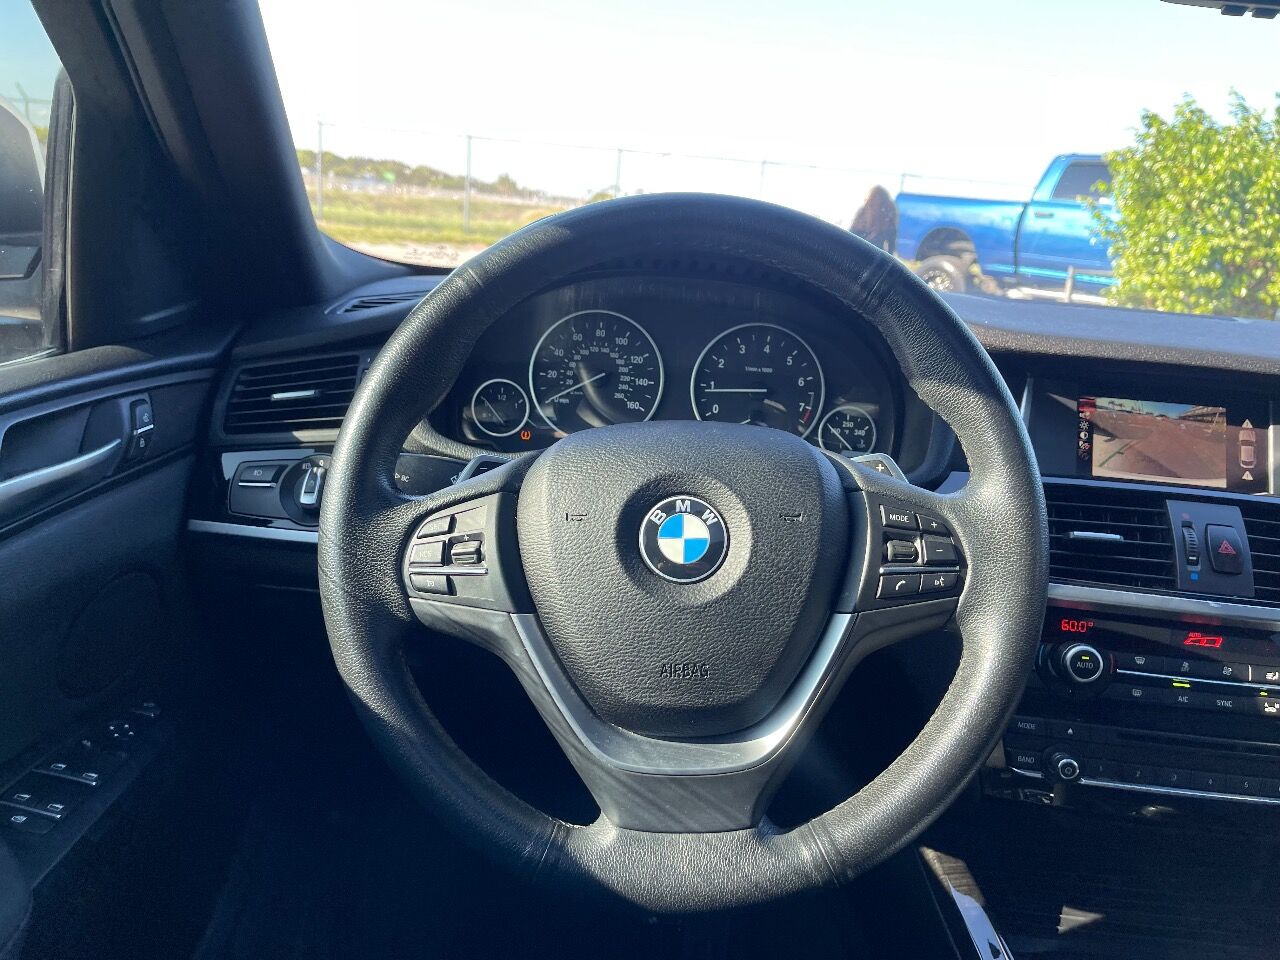 2018 BMW X4 SUV / Crossover - $24,900